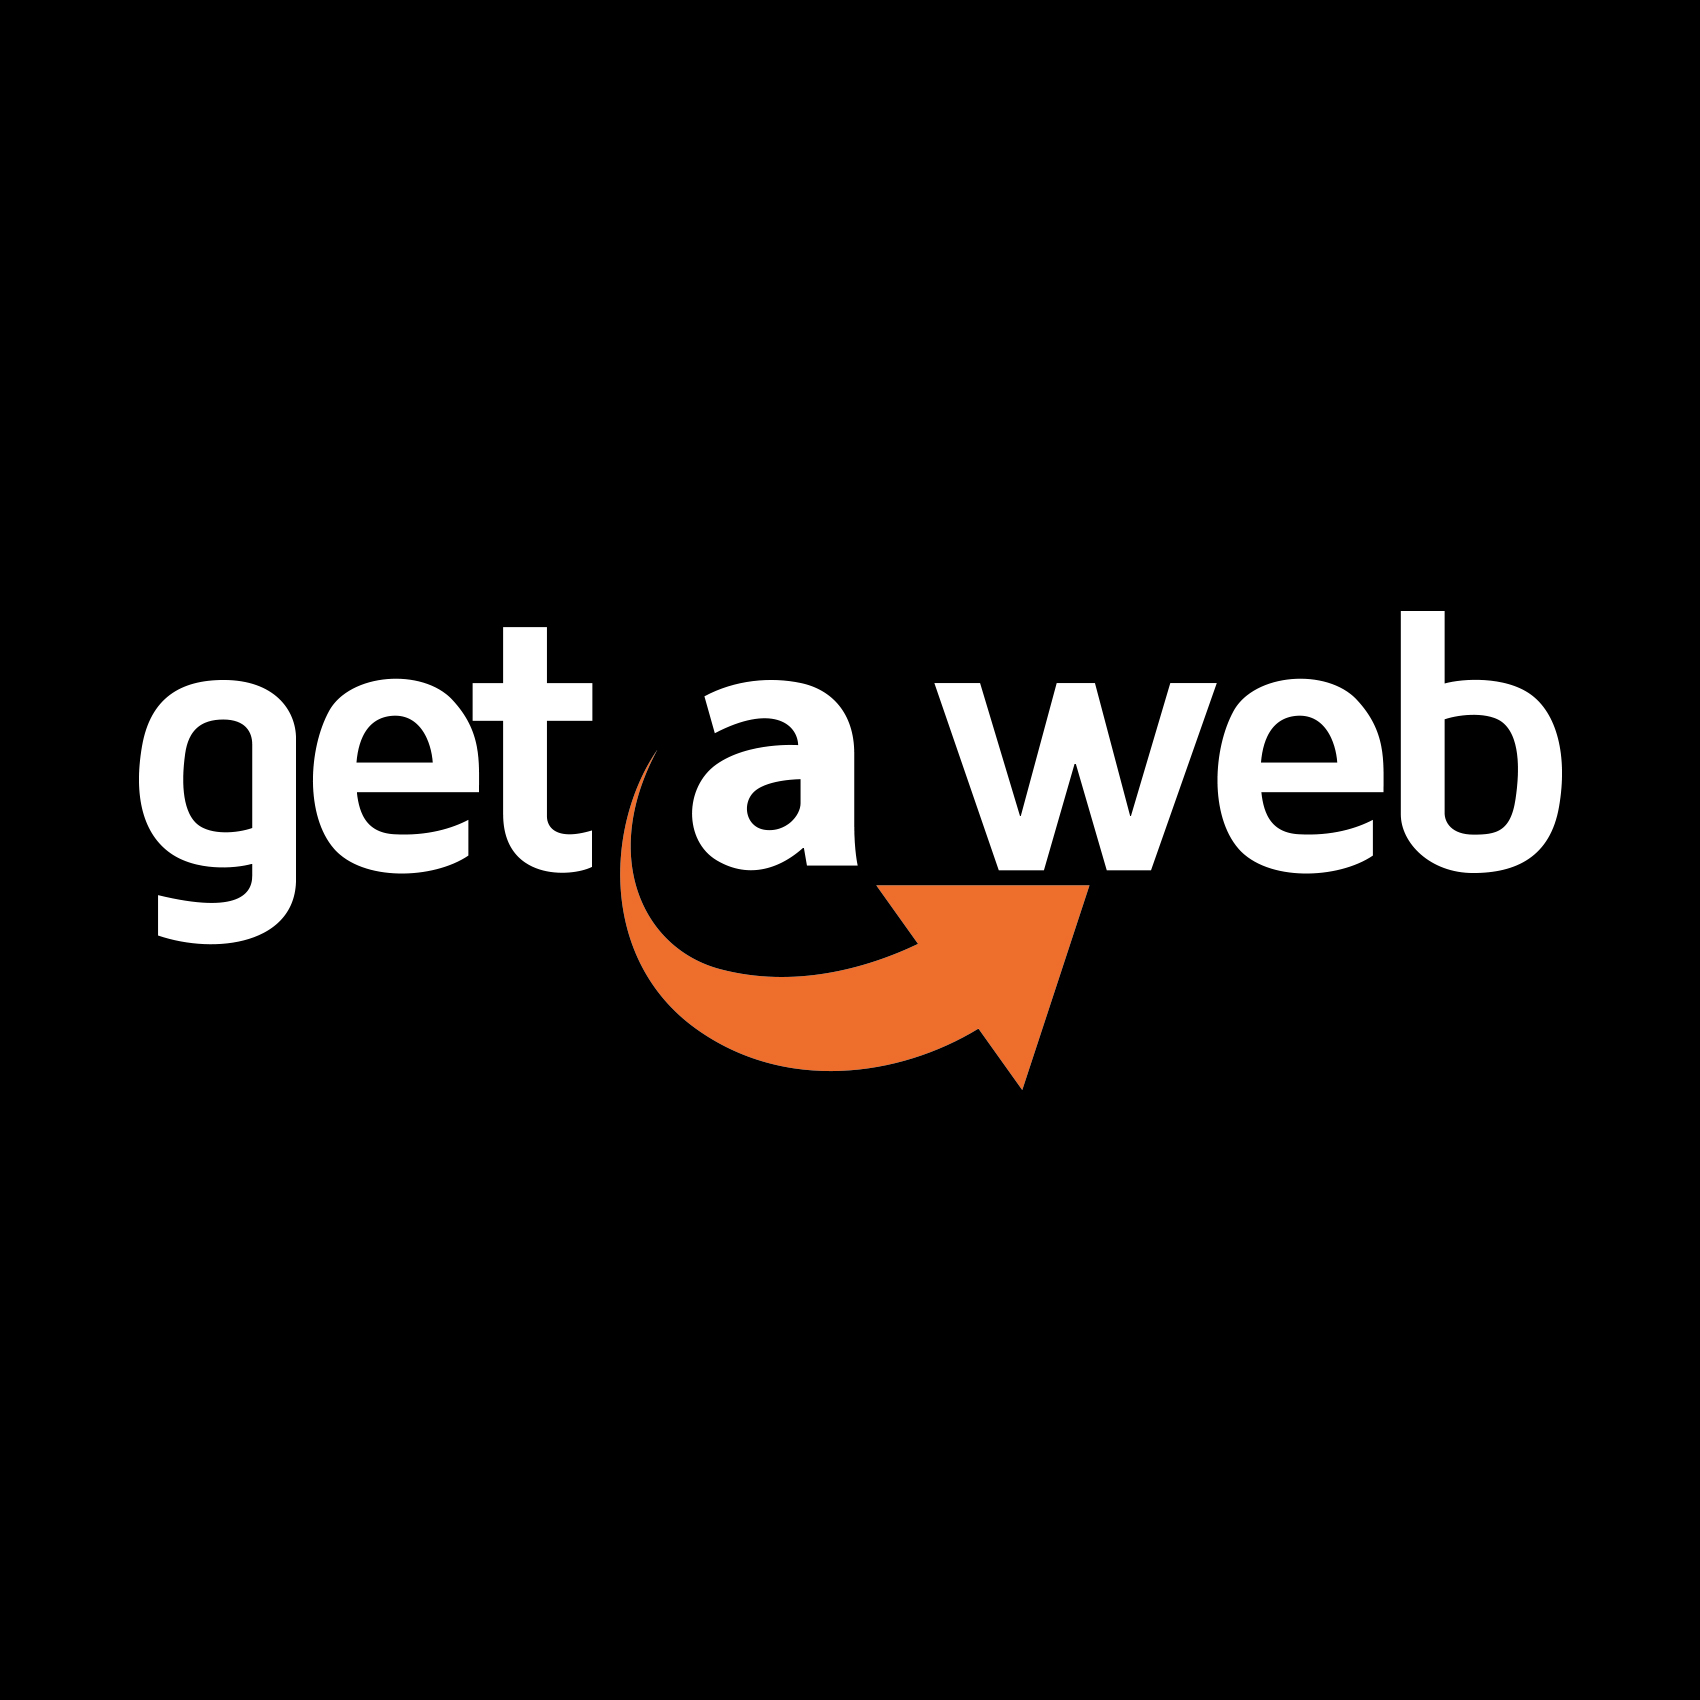 getaweb logo